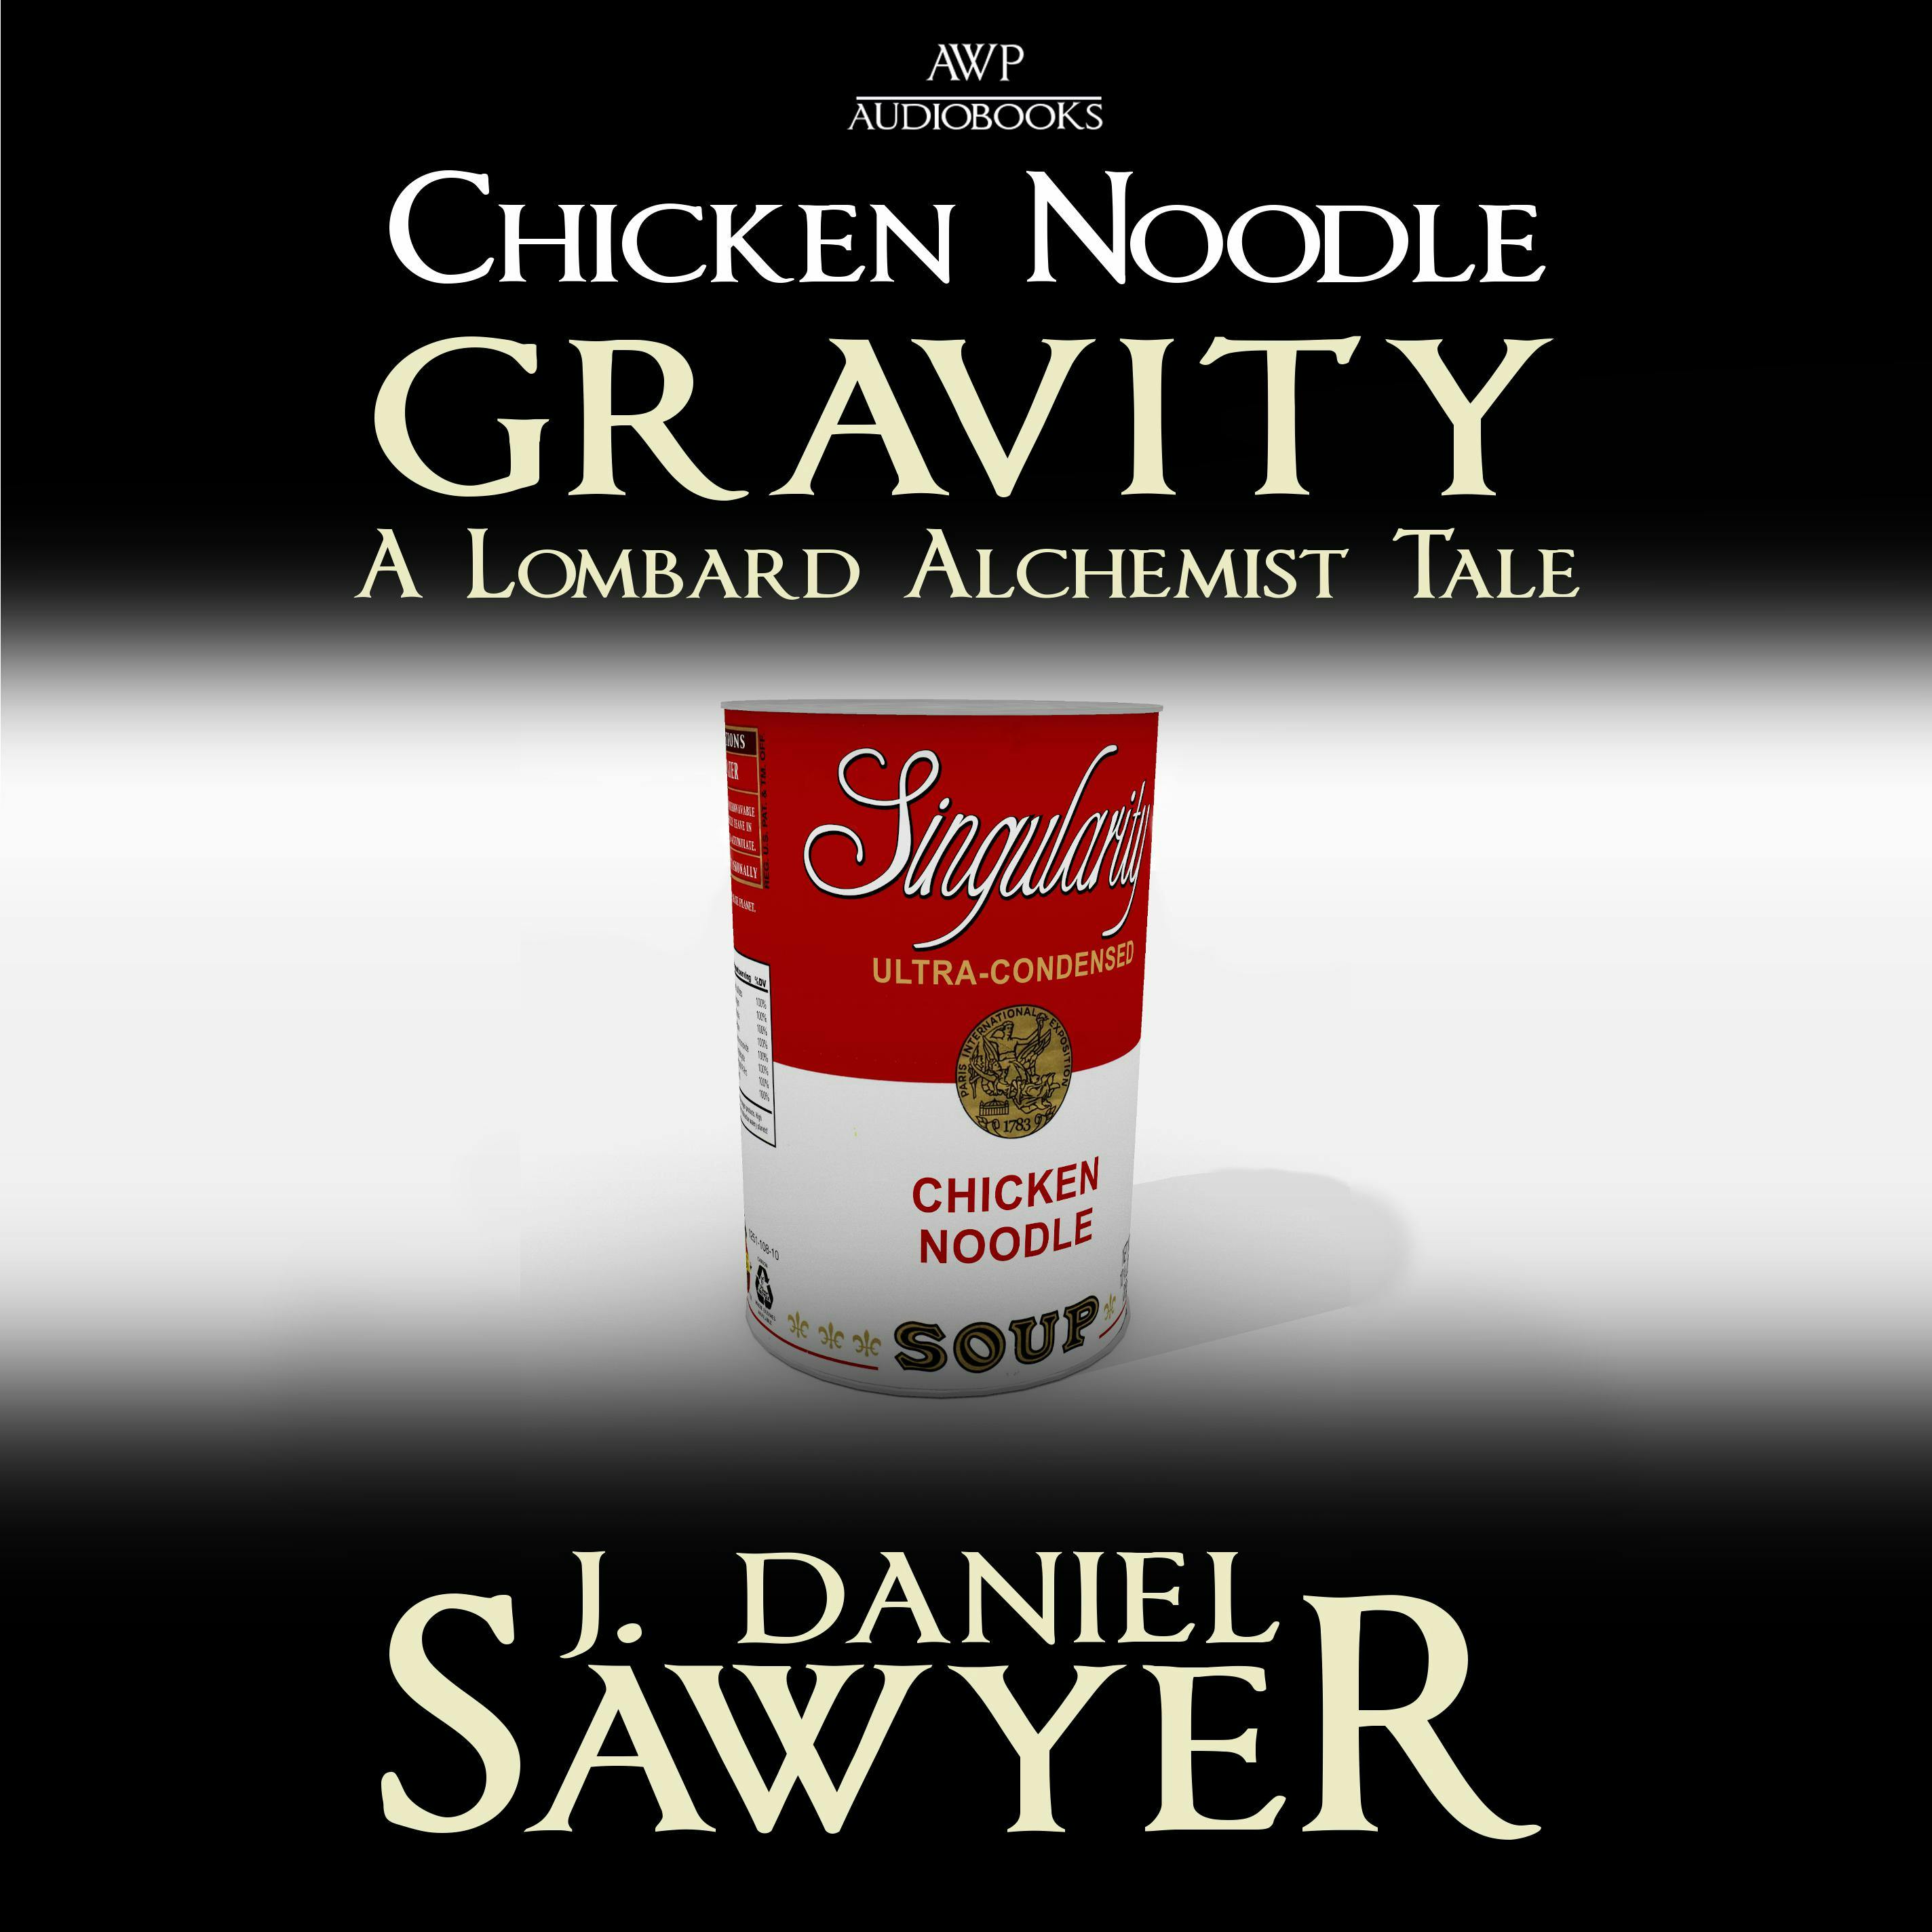 Chicken Noodle Gravity - J. Daniel Sawyer